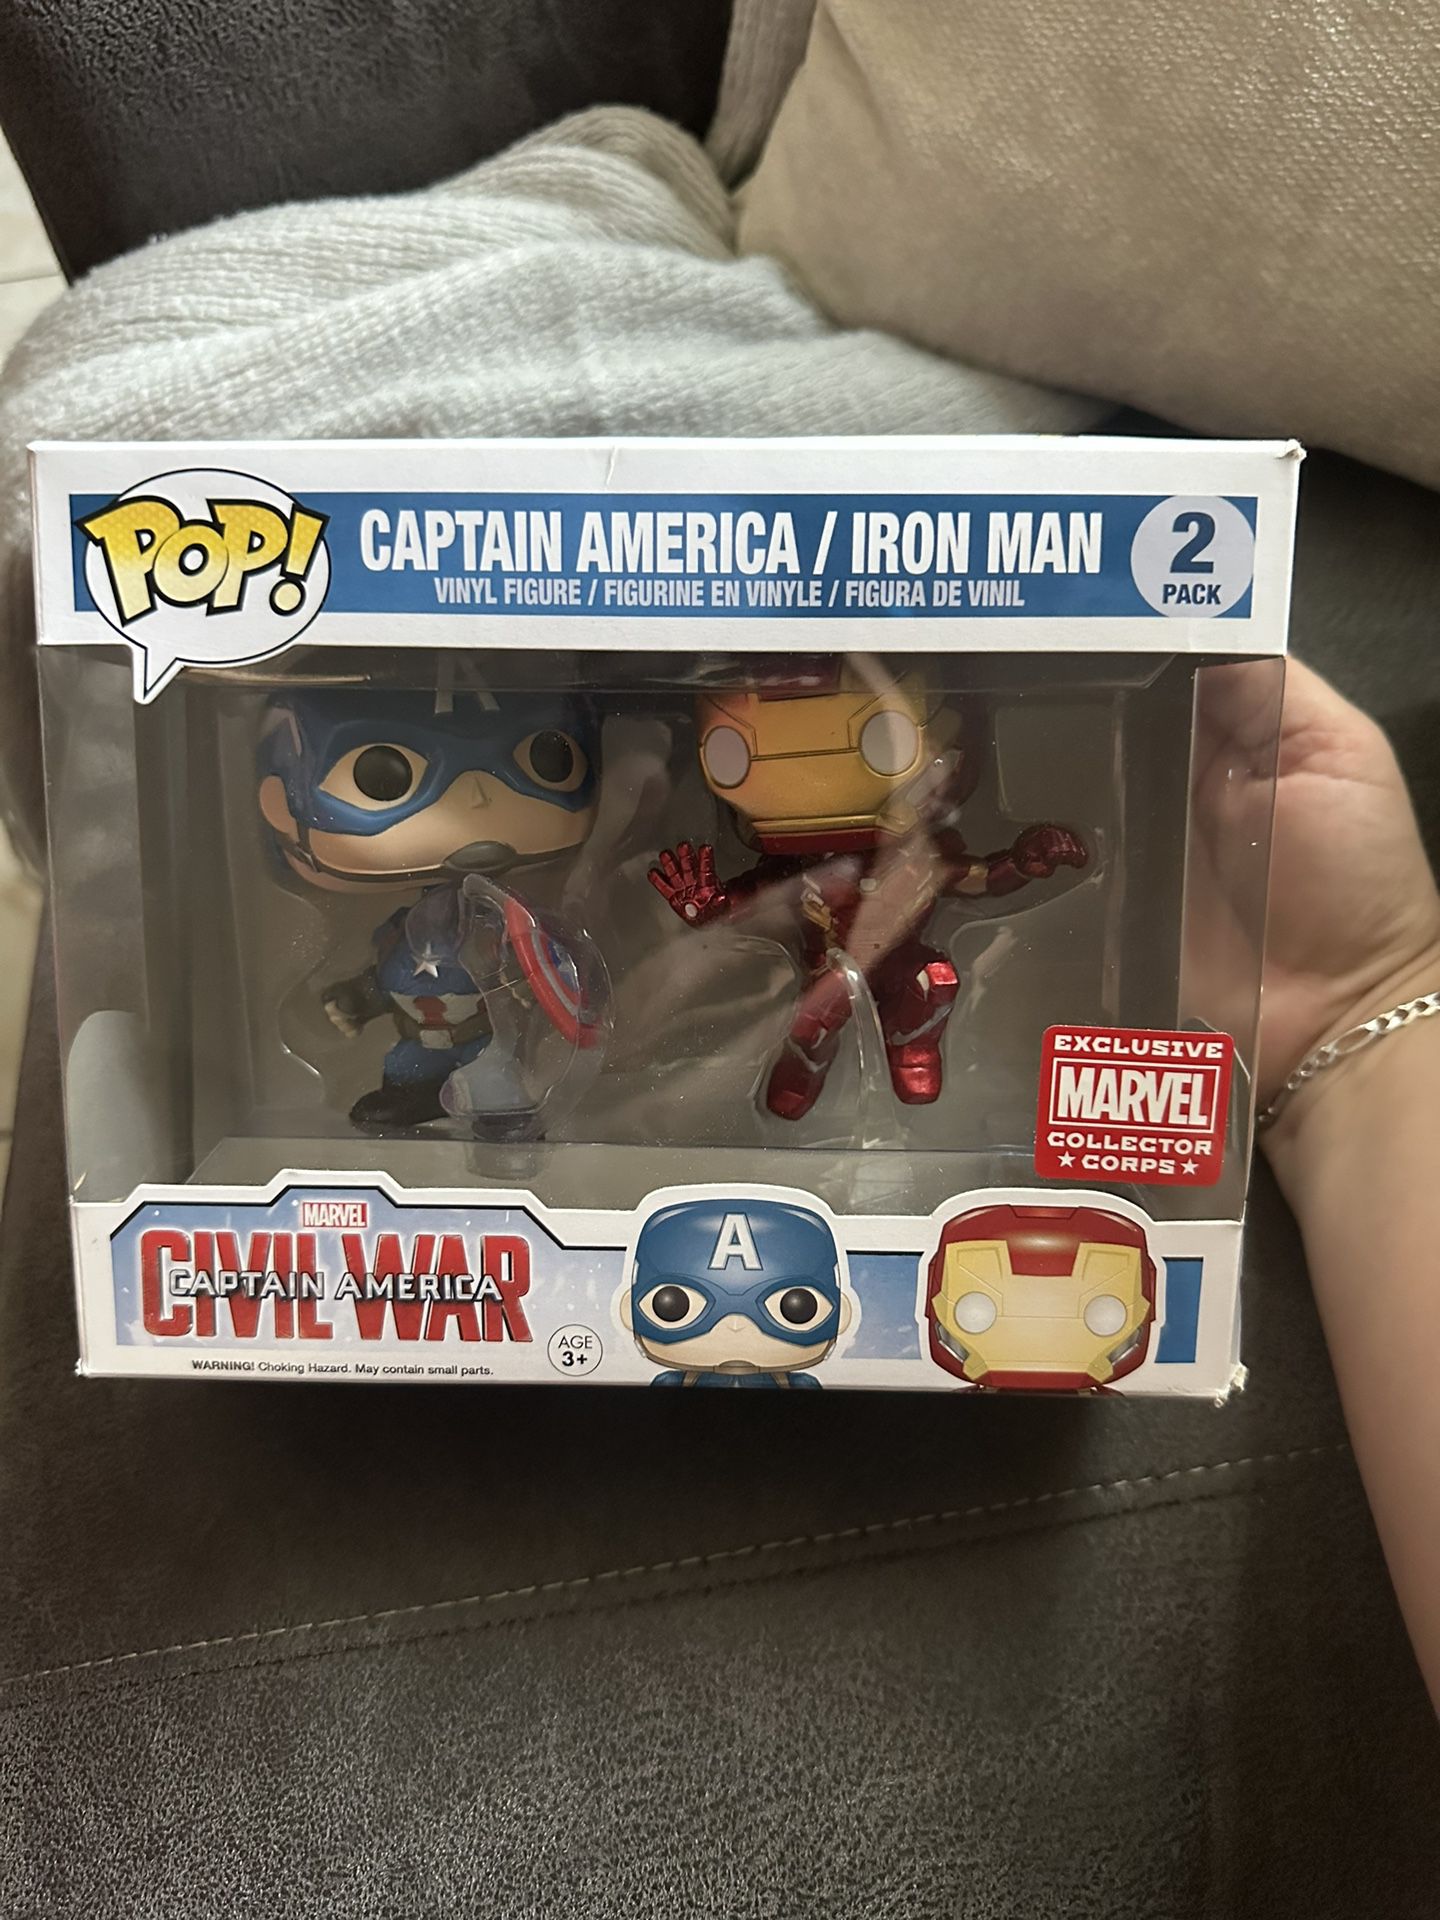 Captain America / Iron Man Funko Pop